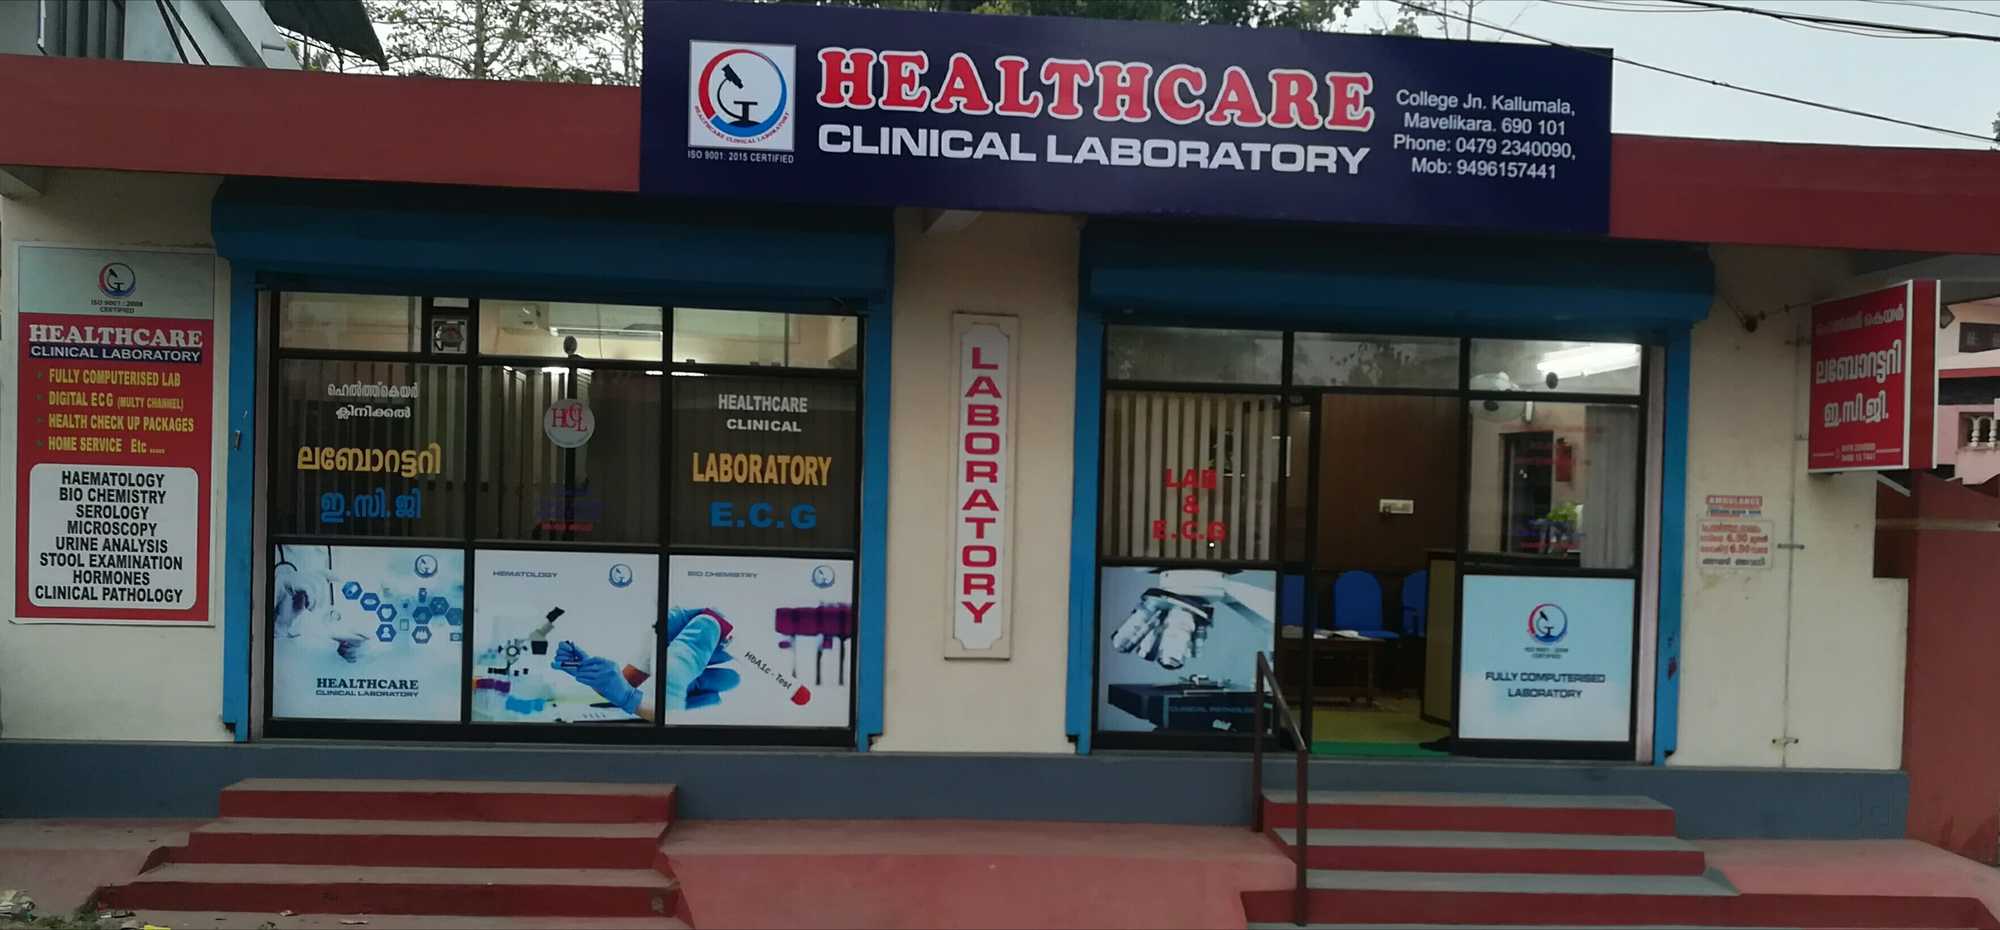 Healthcare Clinical Laboratory, LABORATORY,  service in Mavelikkara, Alappuzha